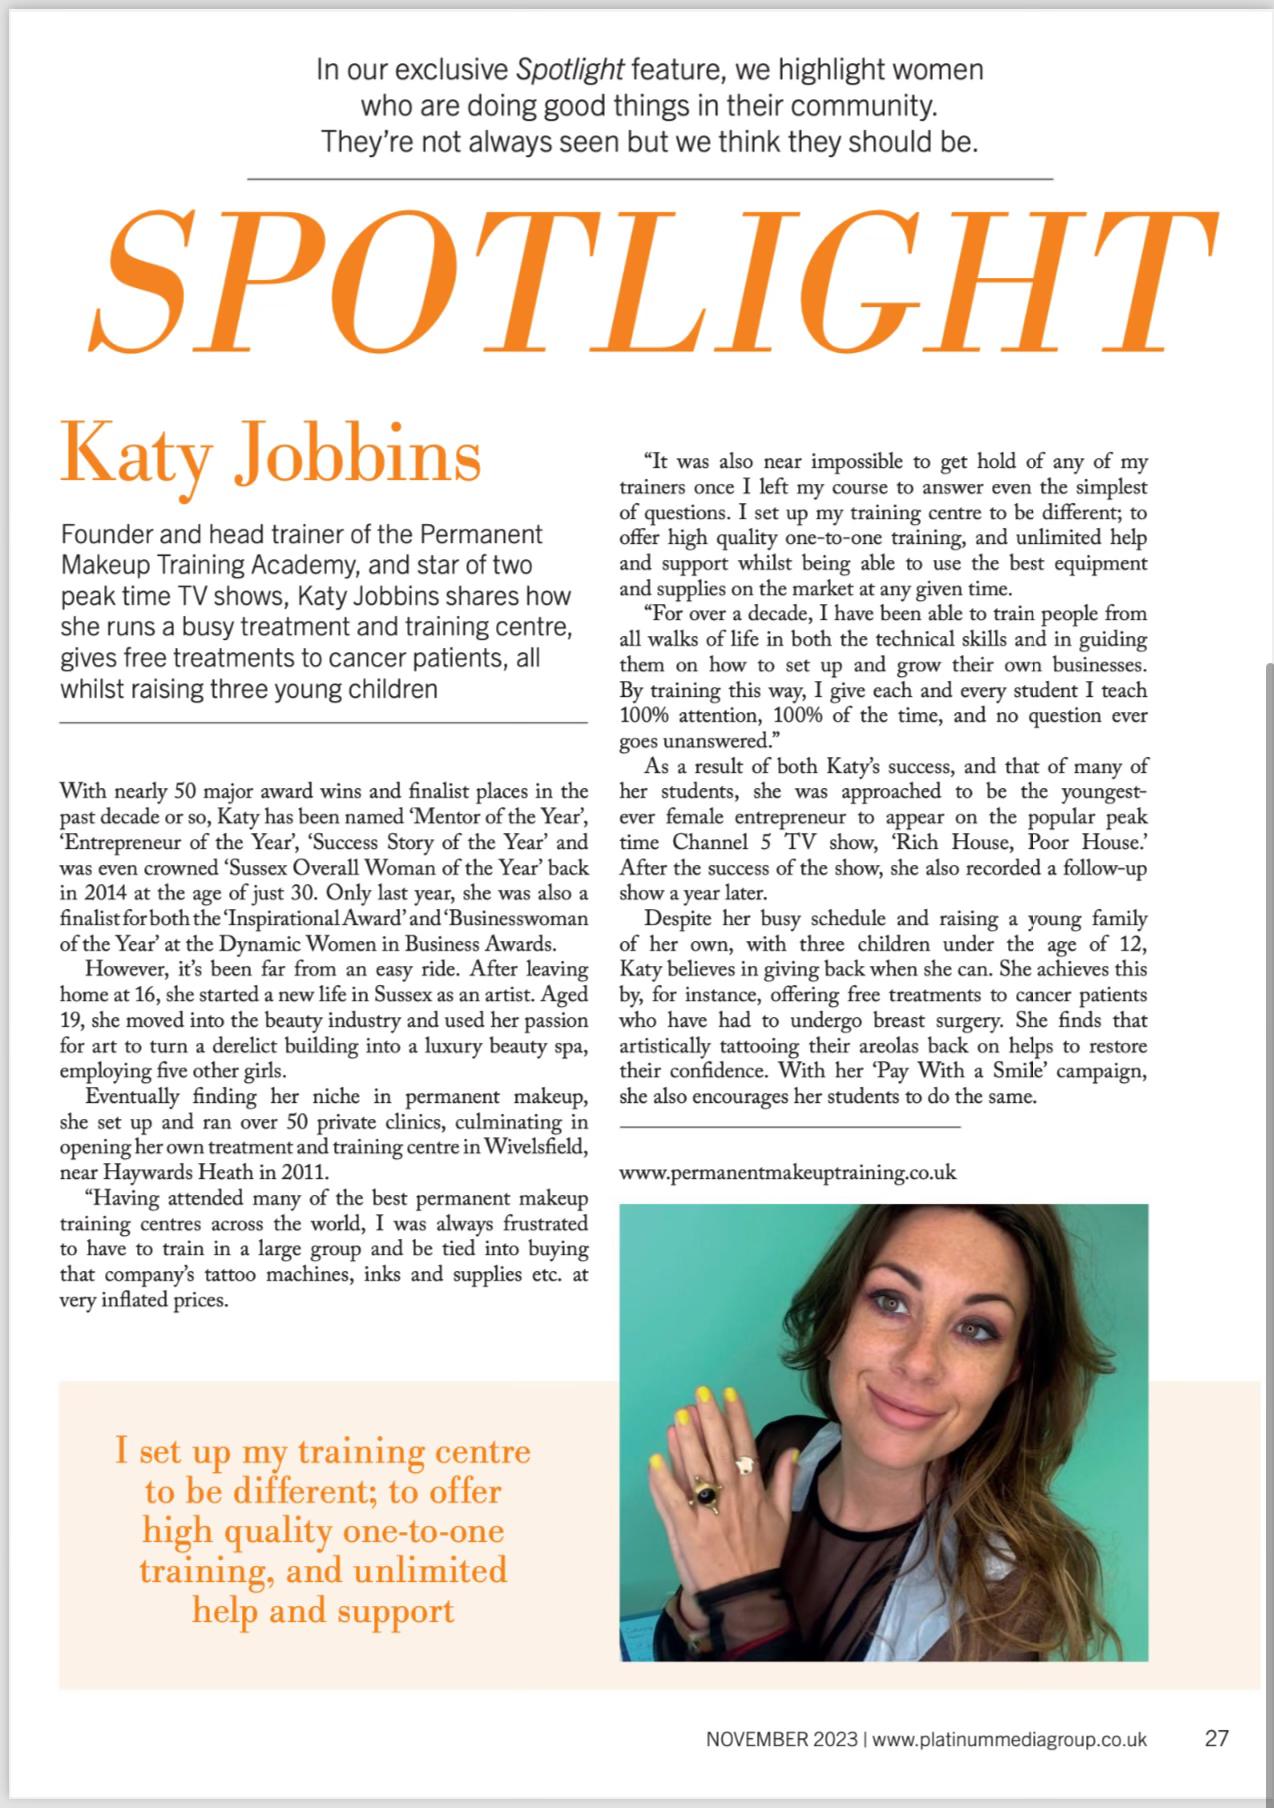 Magazine Article about Katy Jobbins' Career